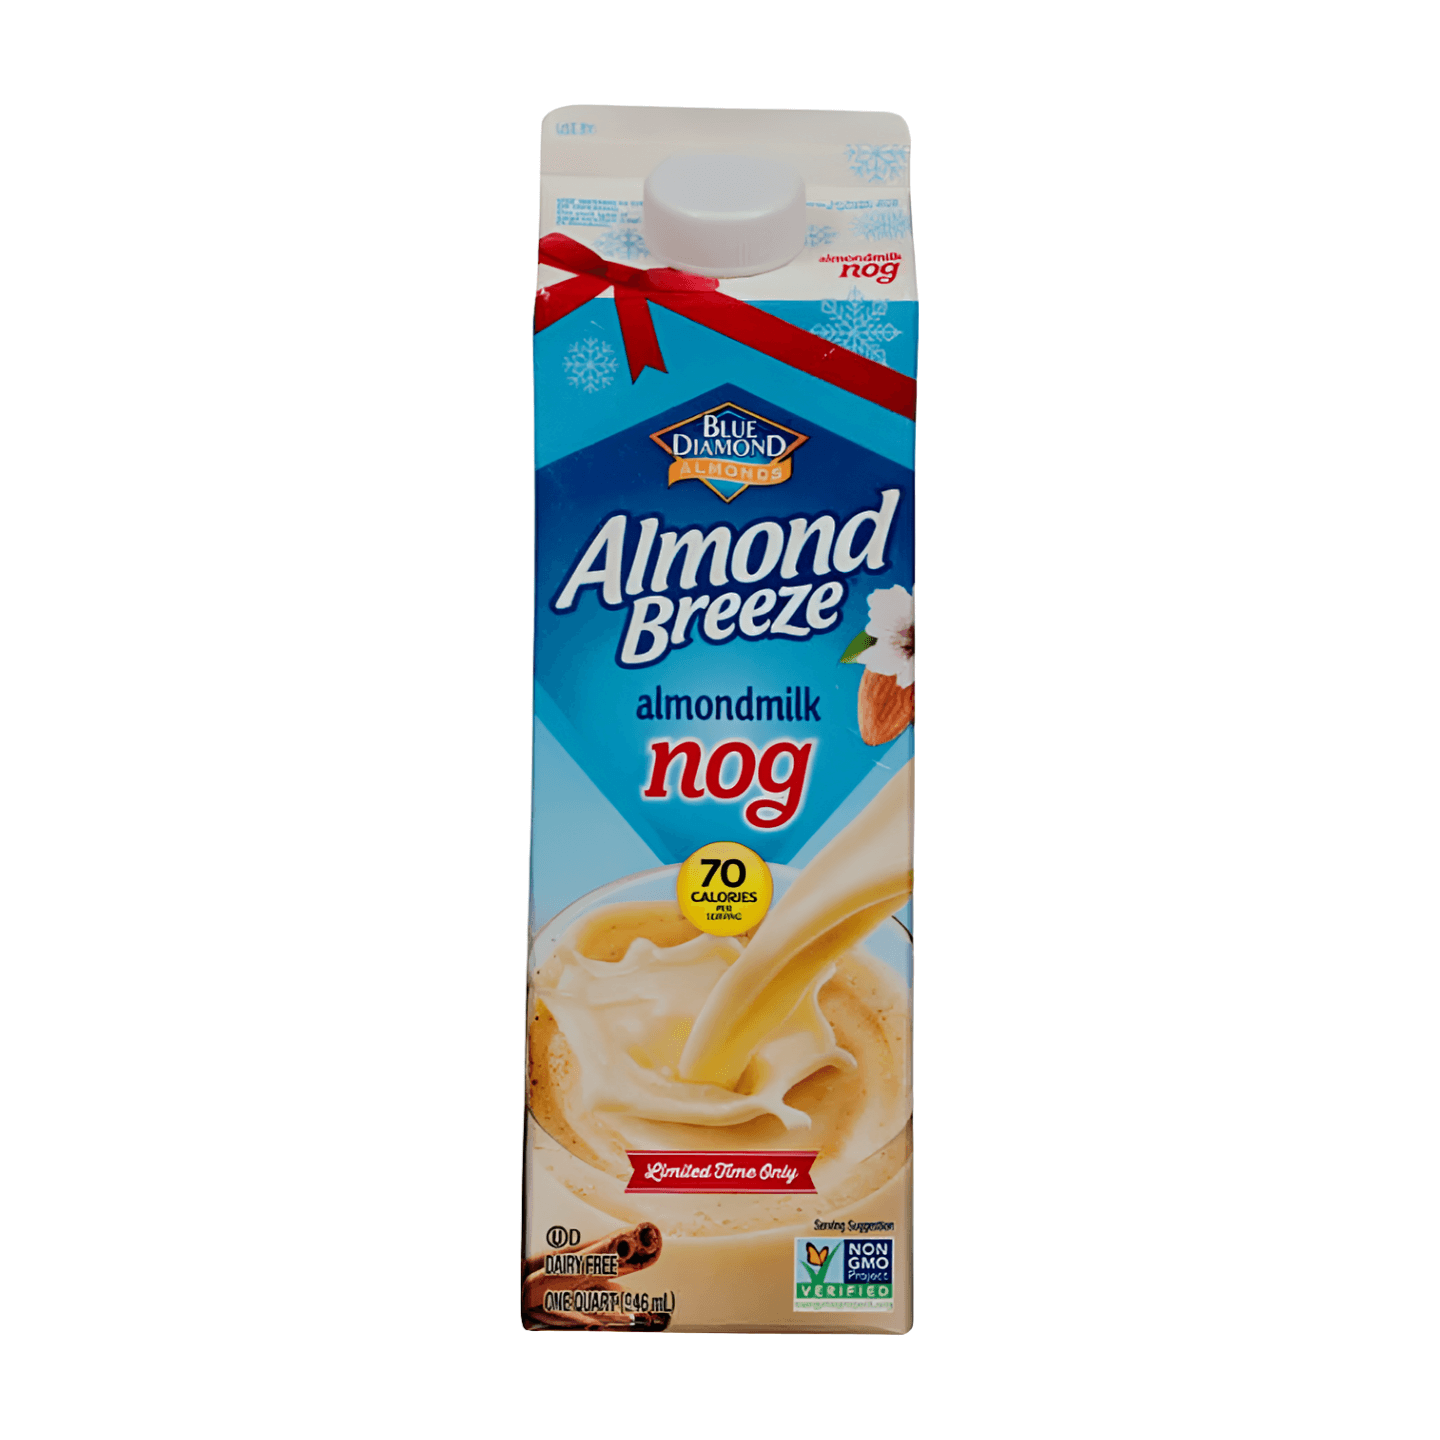 Almond Breeze Almondmilk Nog